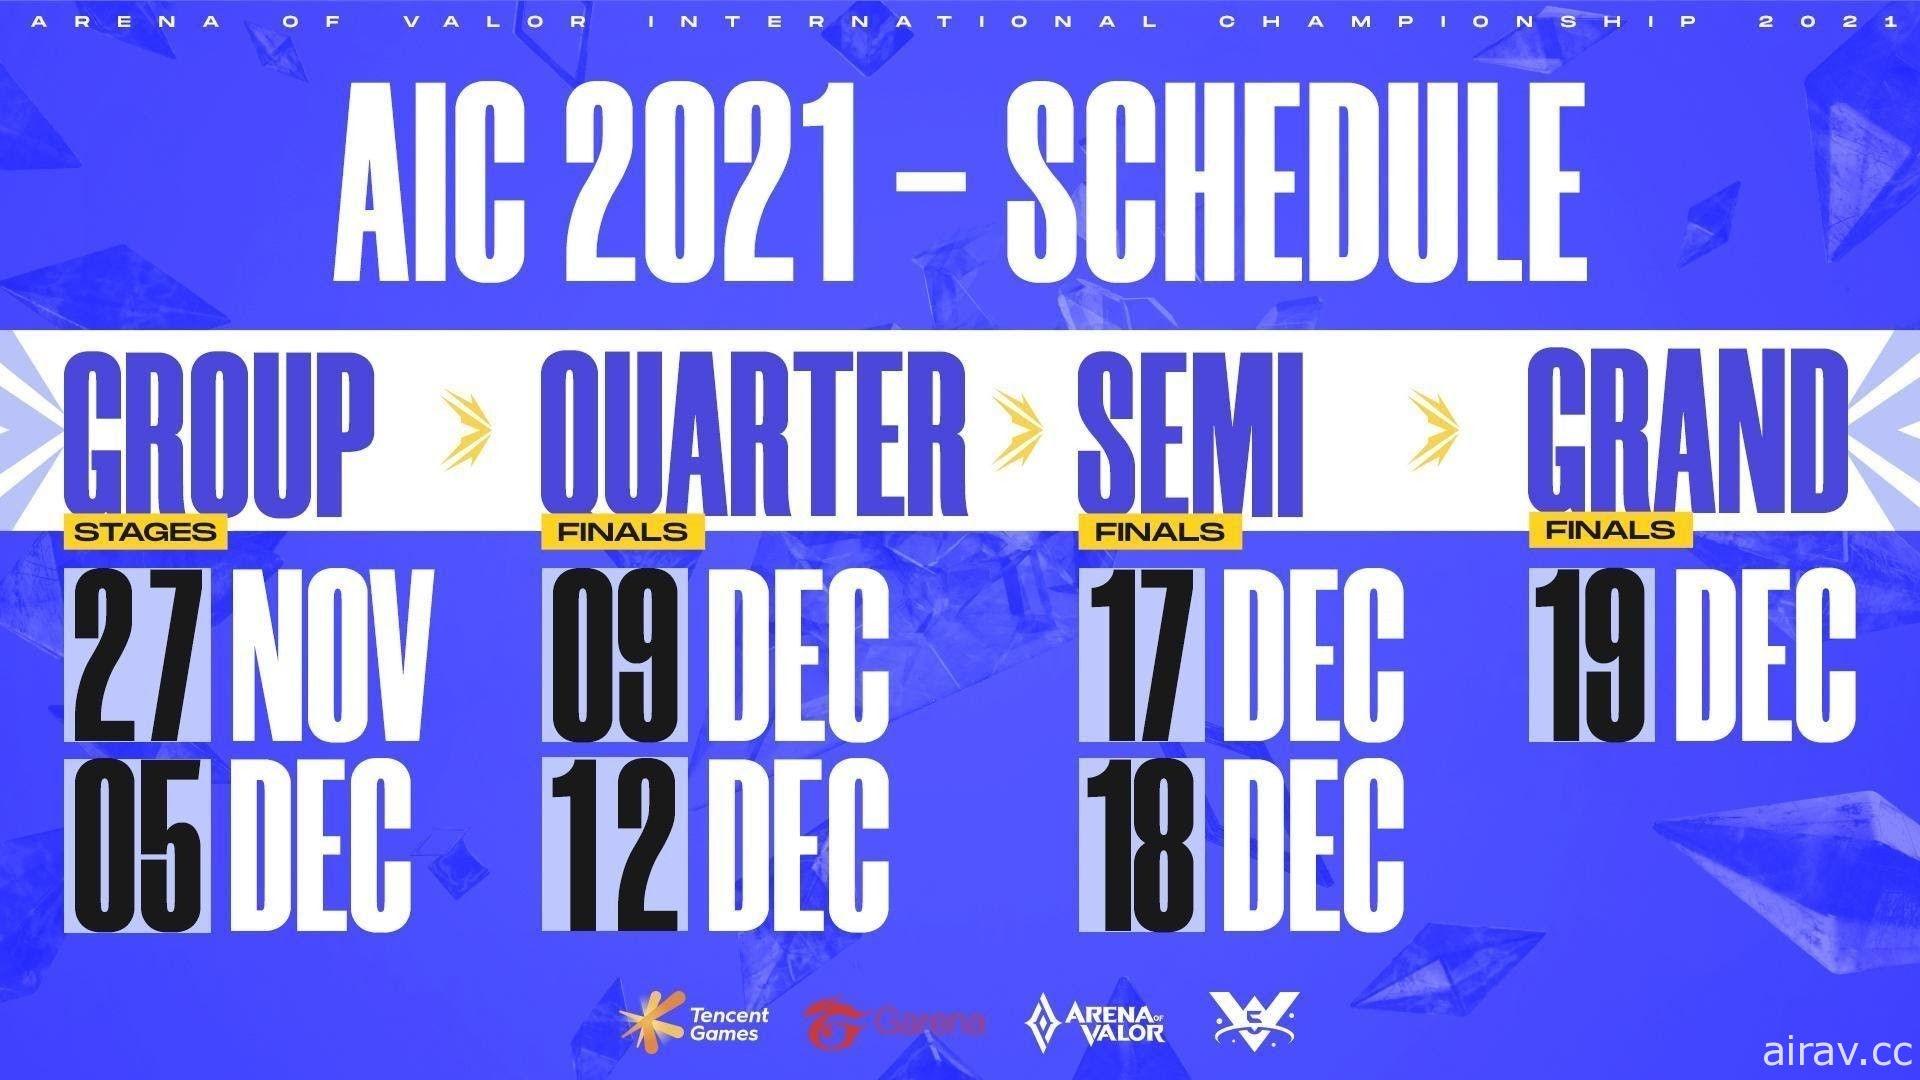 《Garena 傳說對決》 AIC 2021 國際賽結合五週年慶典即將登場